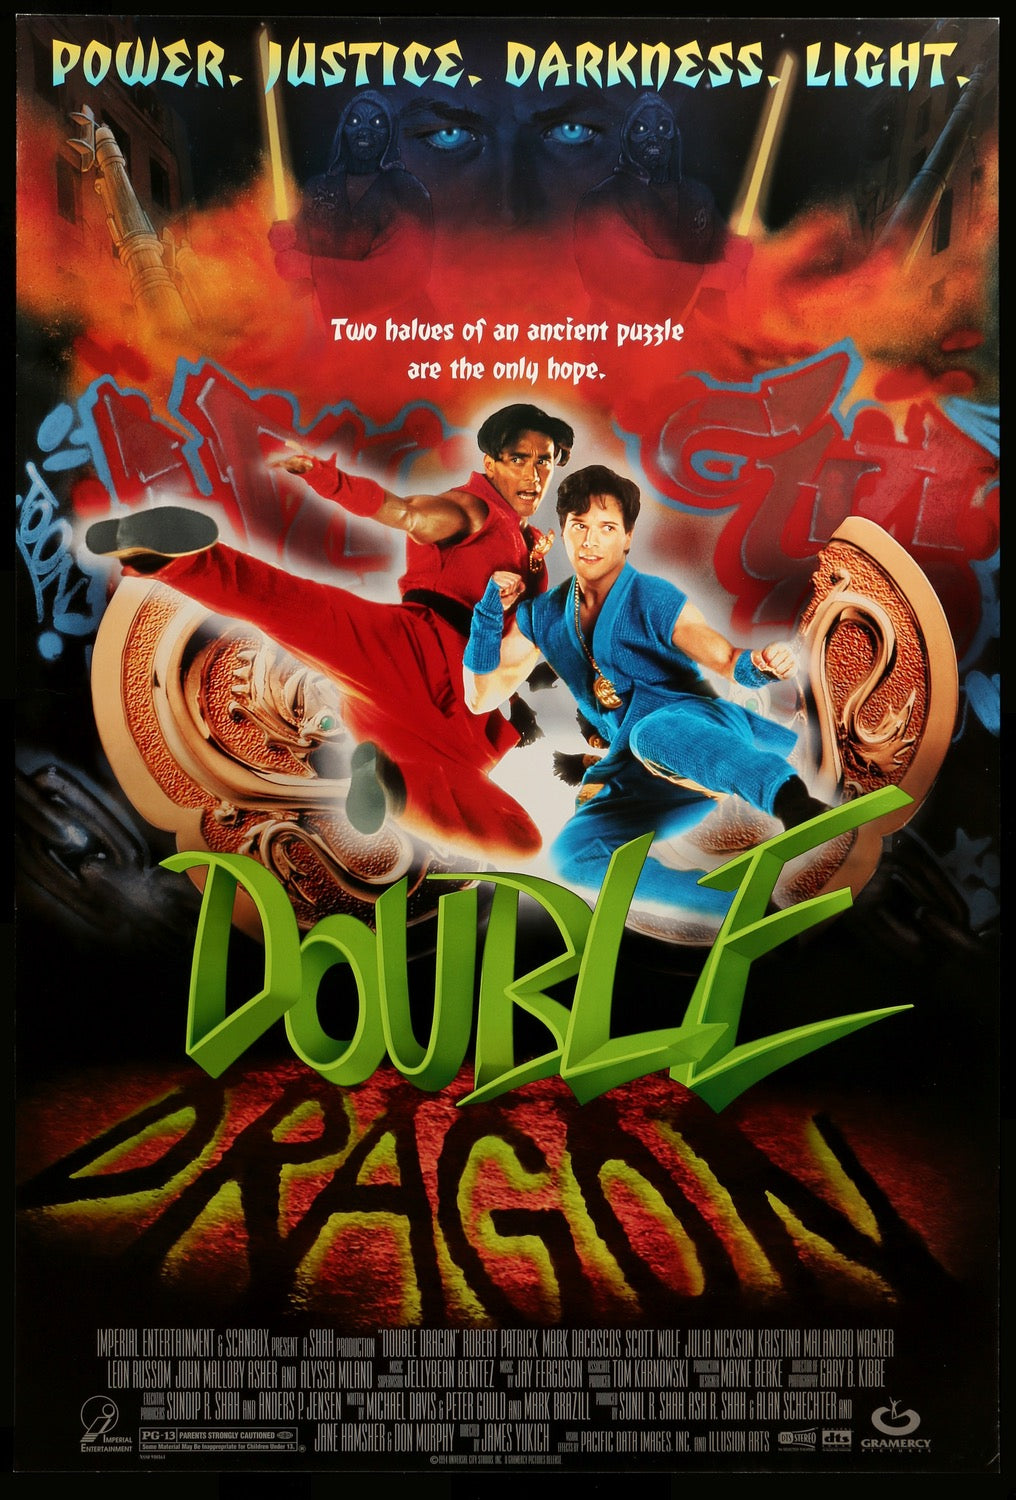 Double Dragon (1994) original movie poster for sale at Original Film Art